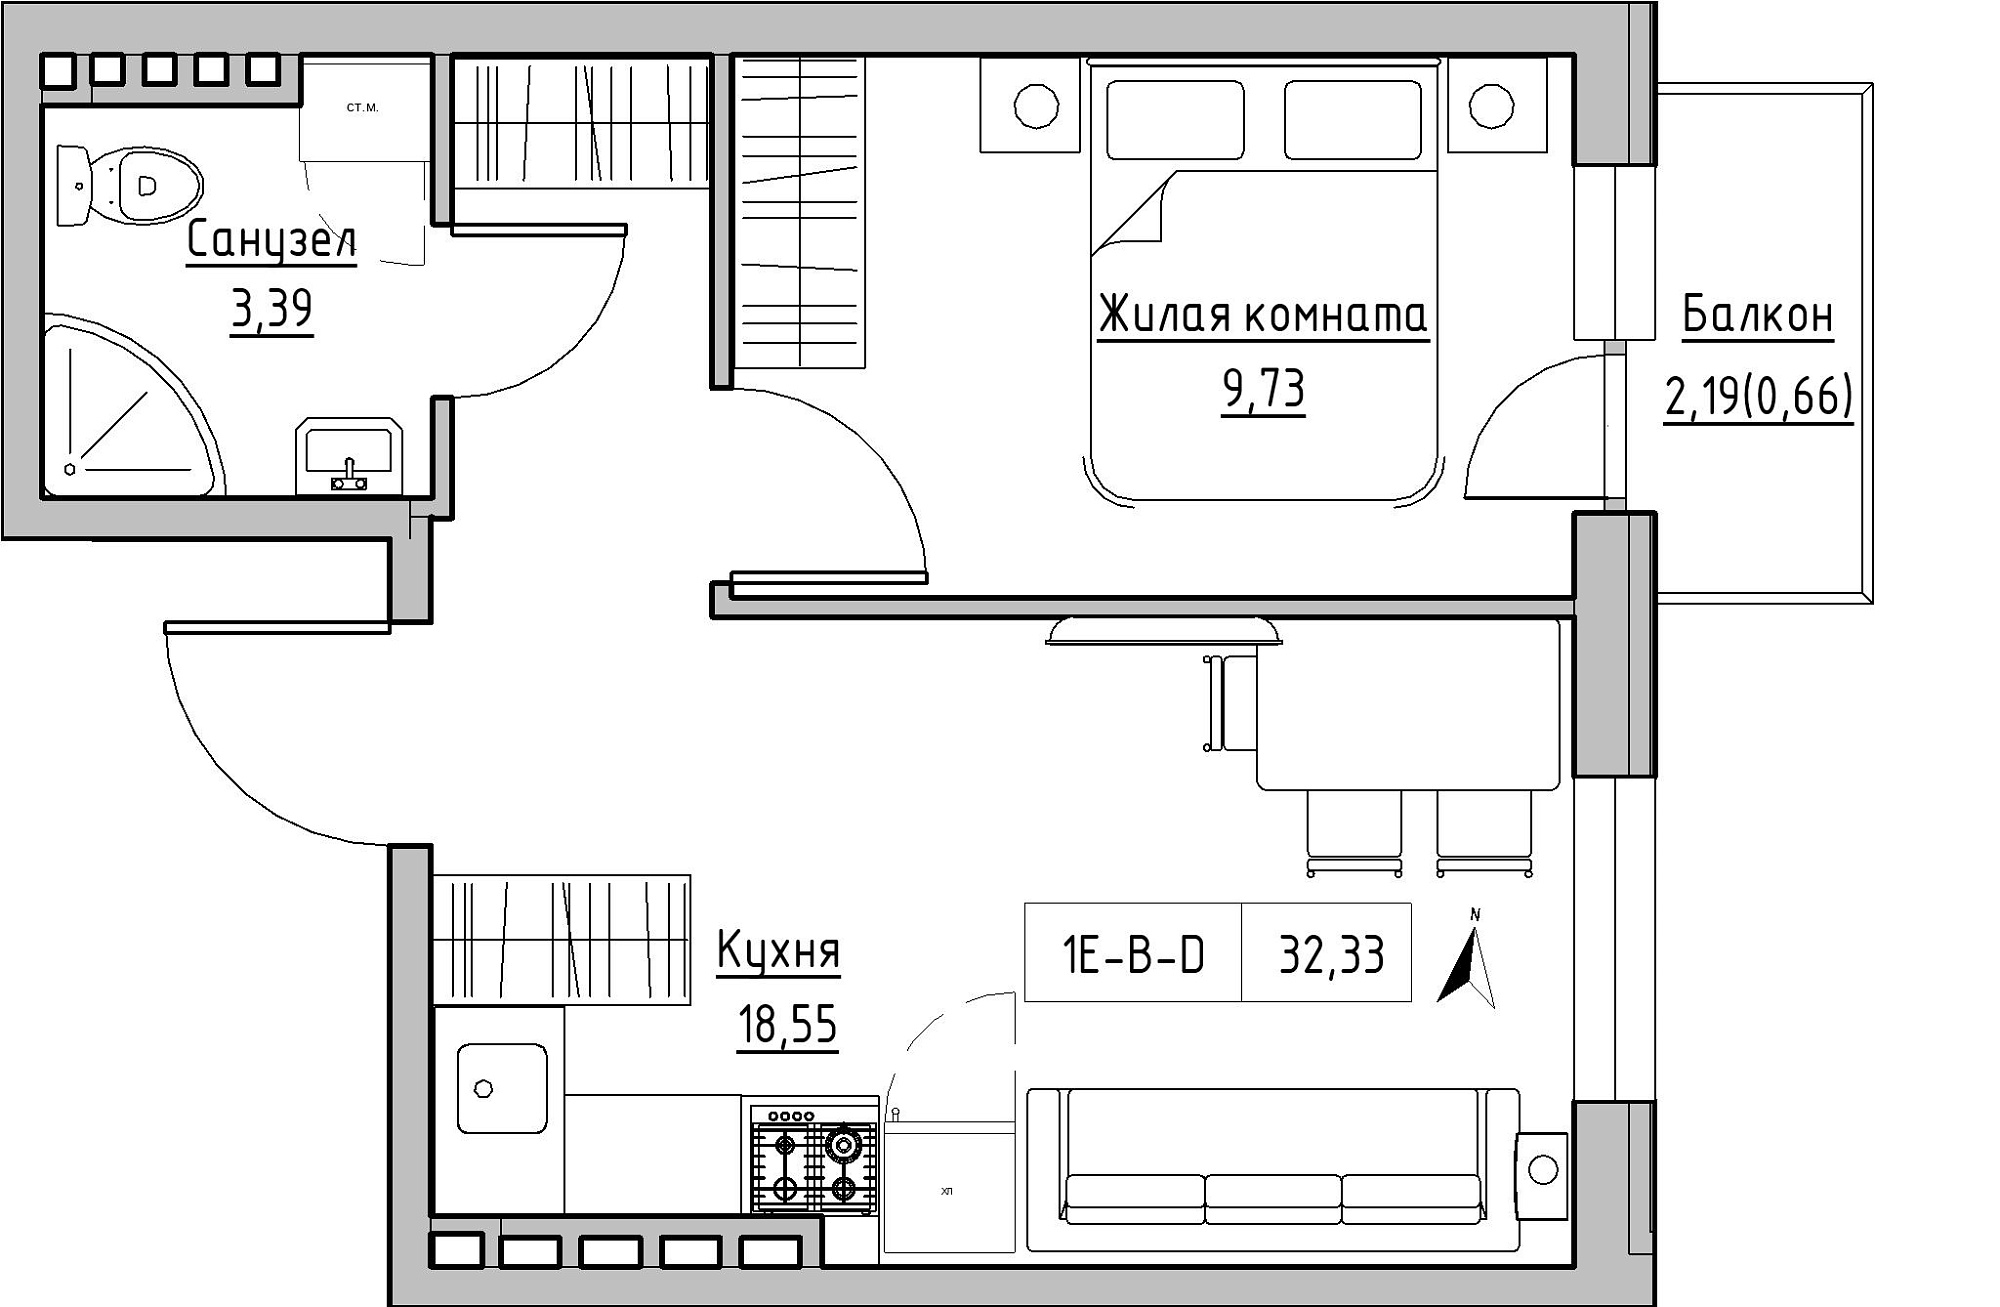 Planning 1-rm flats area 32.33m2, KS-024-04/0015.